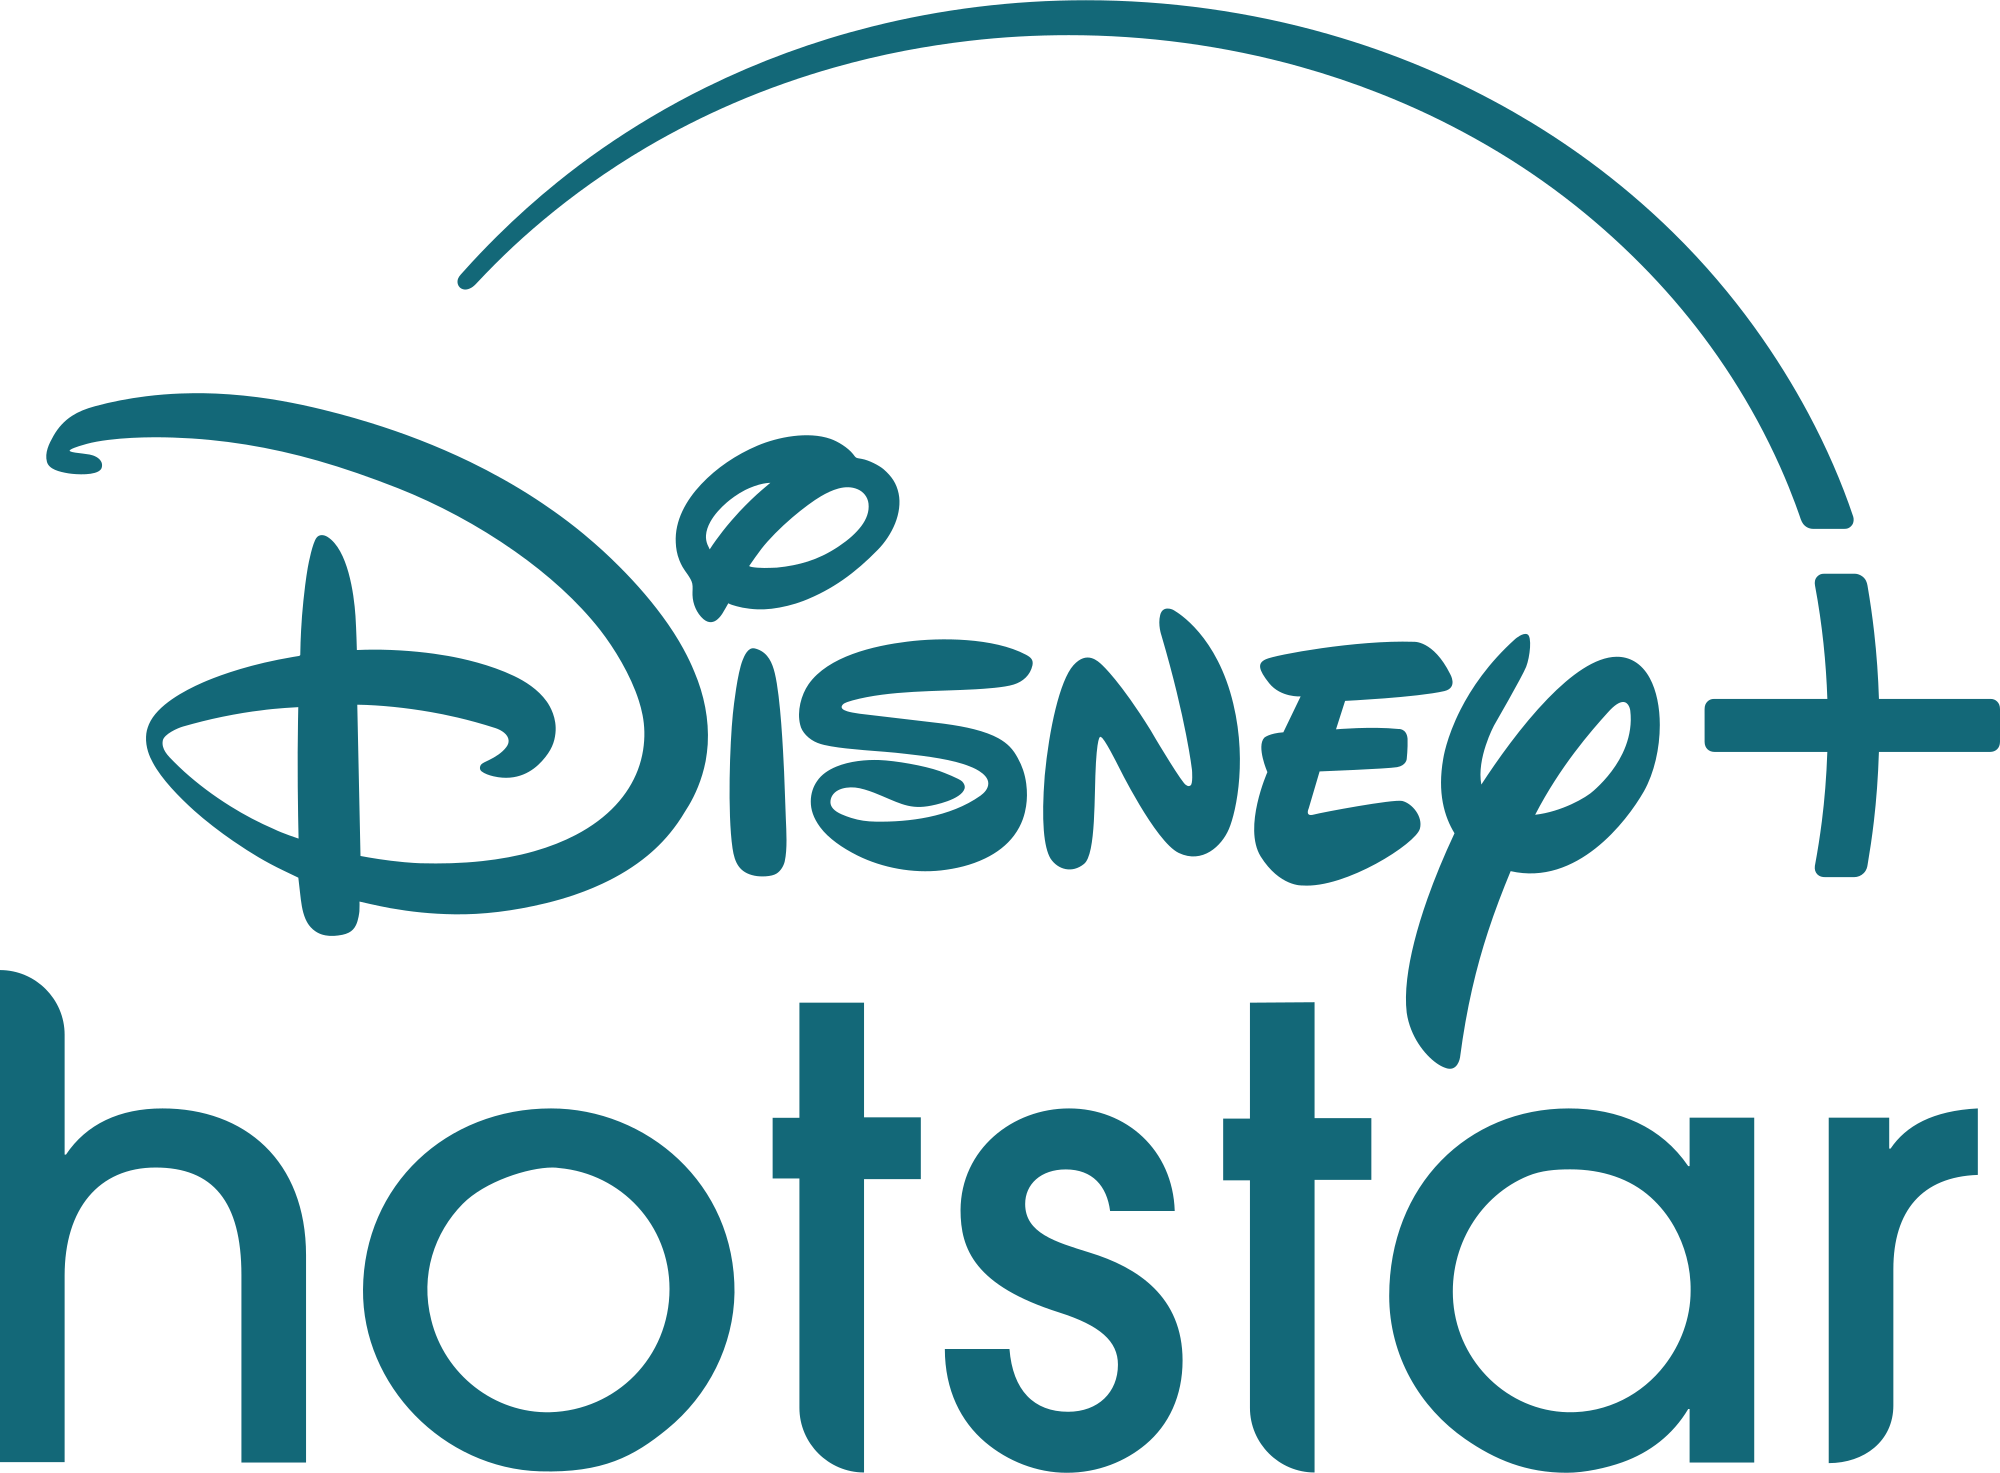 Disney+ Hotstar - network